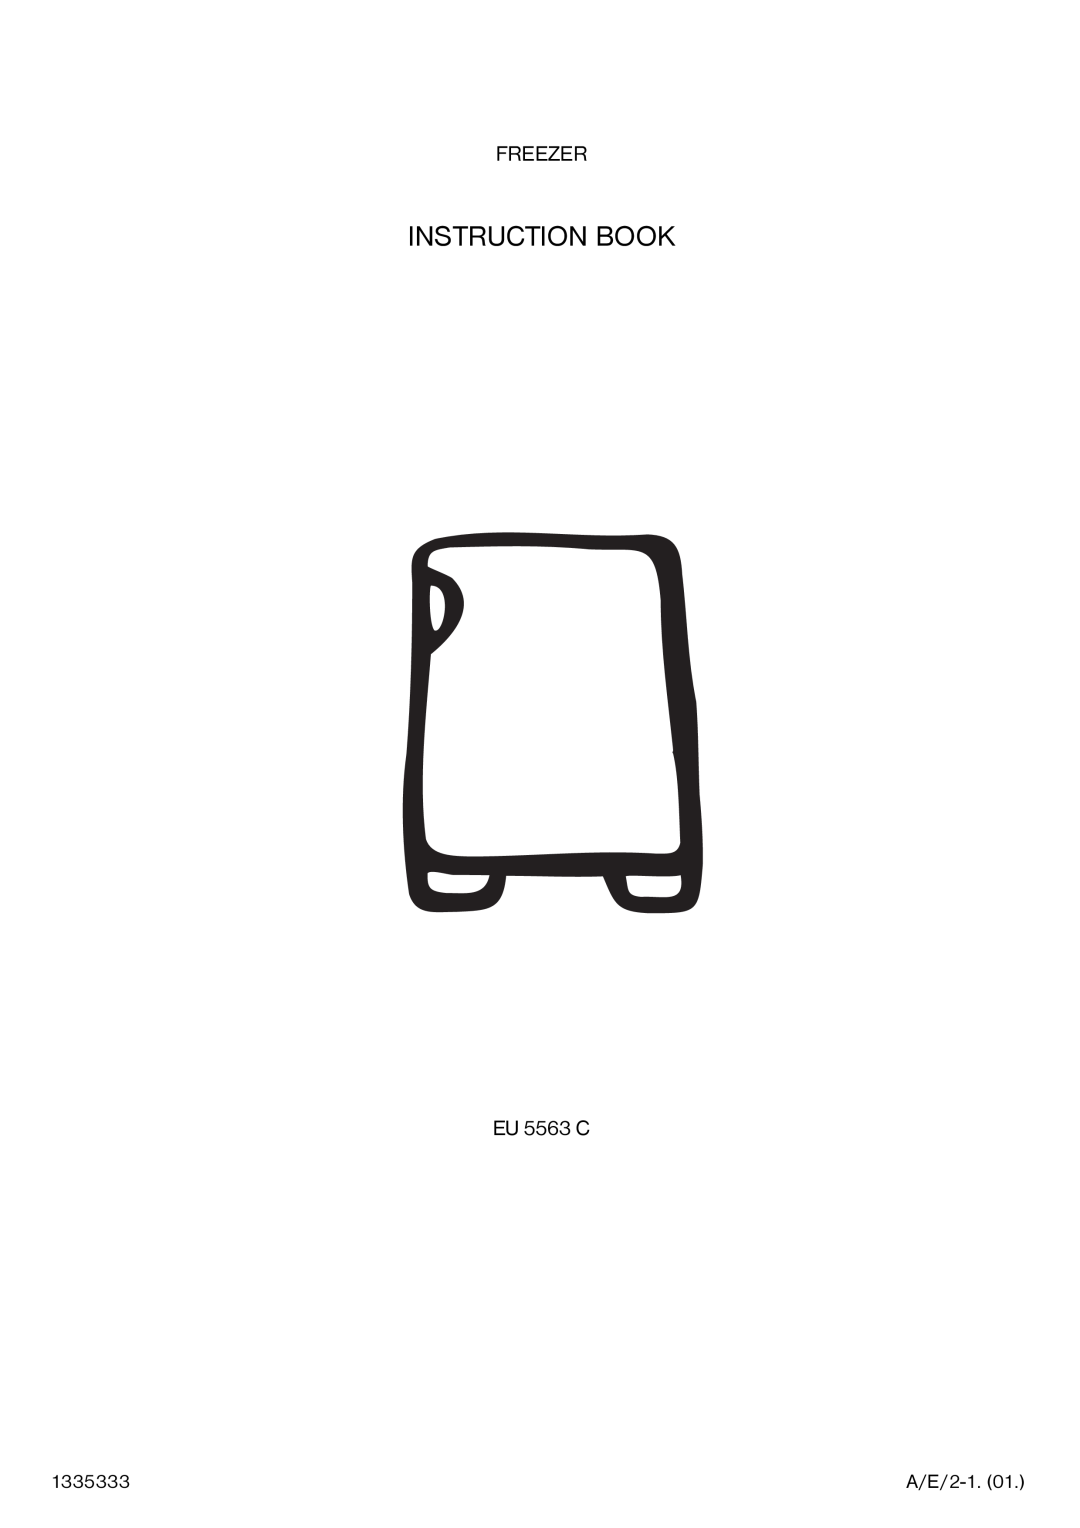 Electrolux EU 5563 C manual Instruction Book, Freezer 